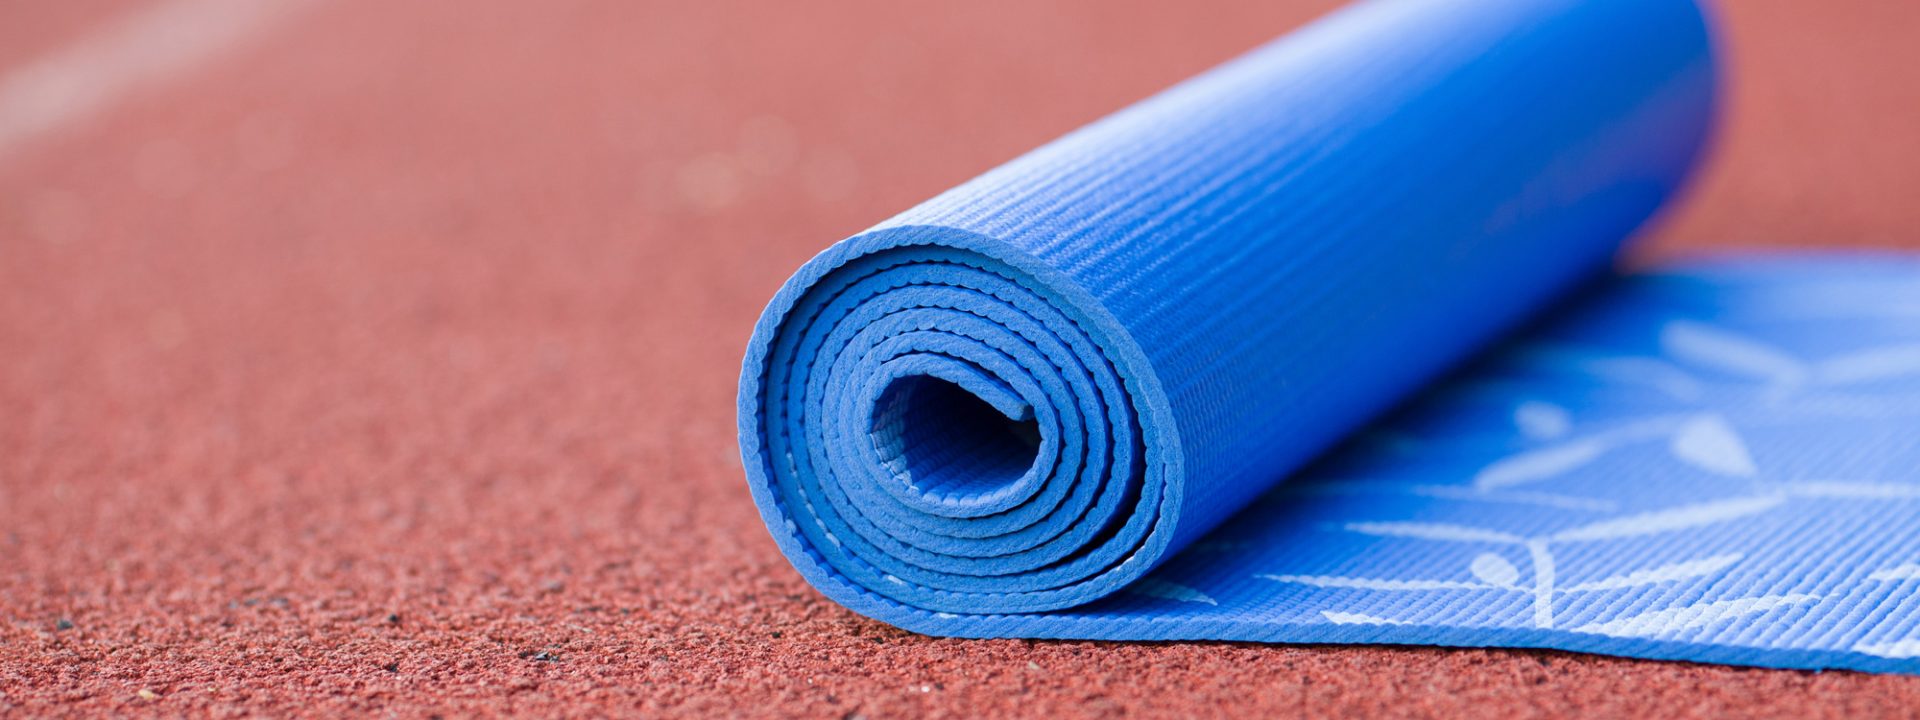 yoga mat on running track